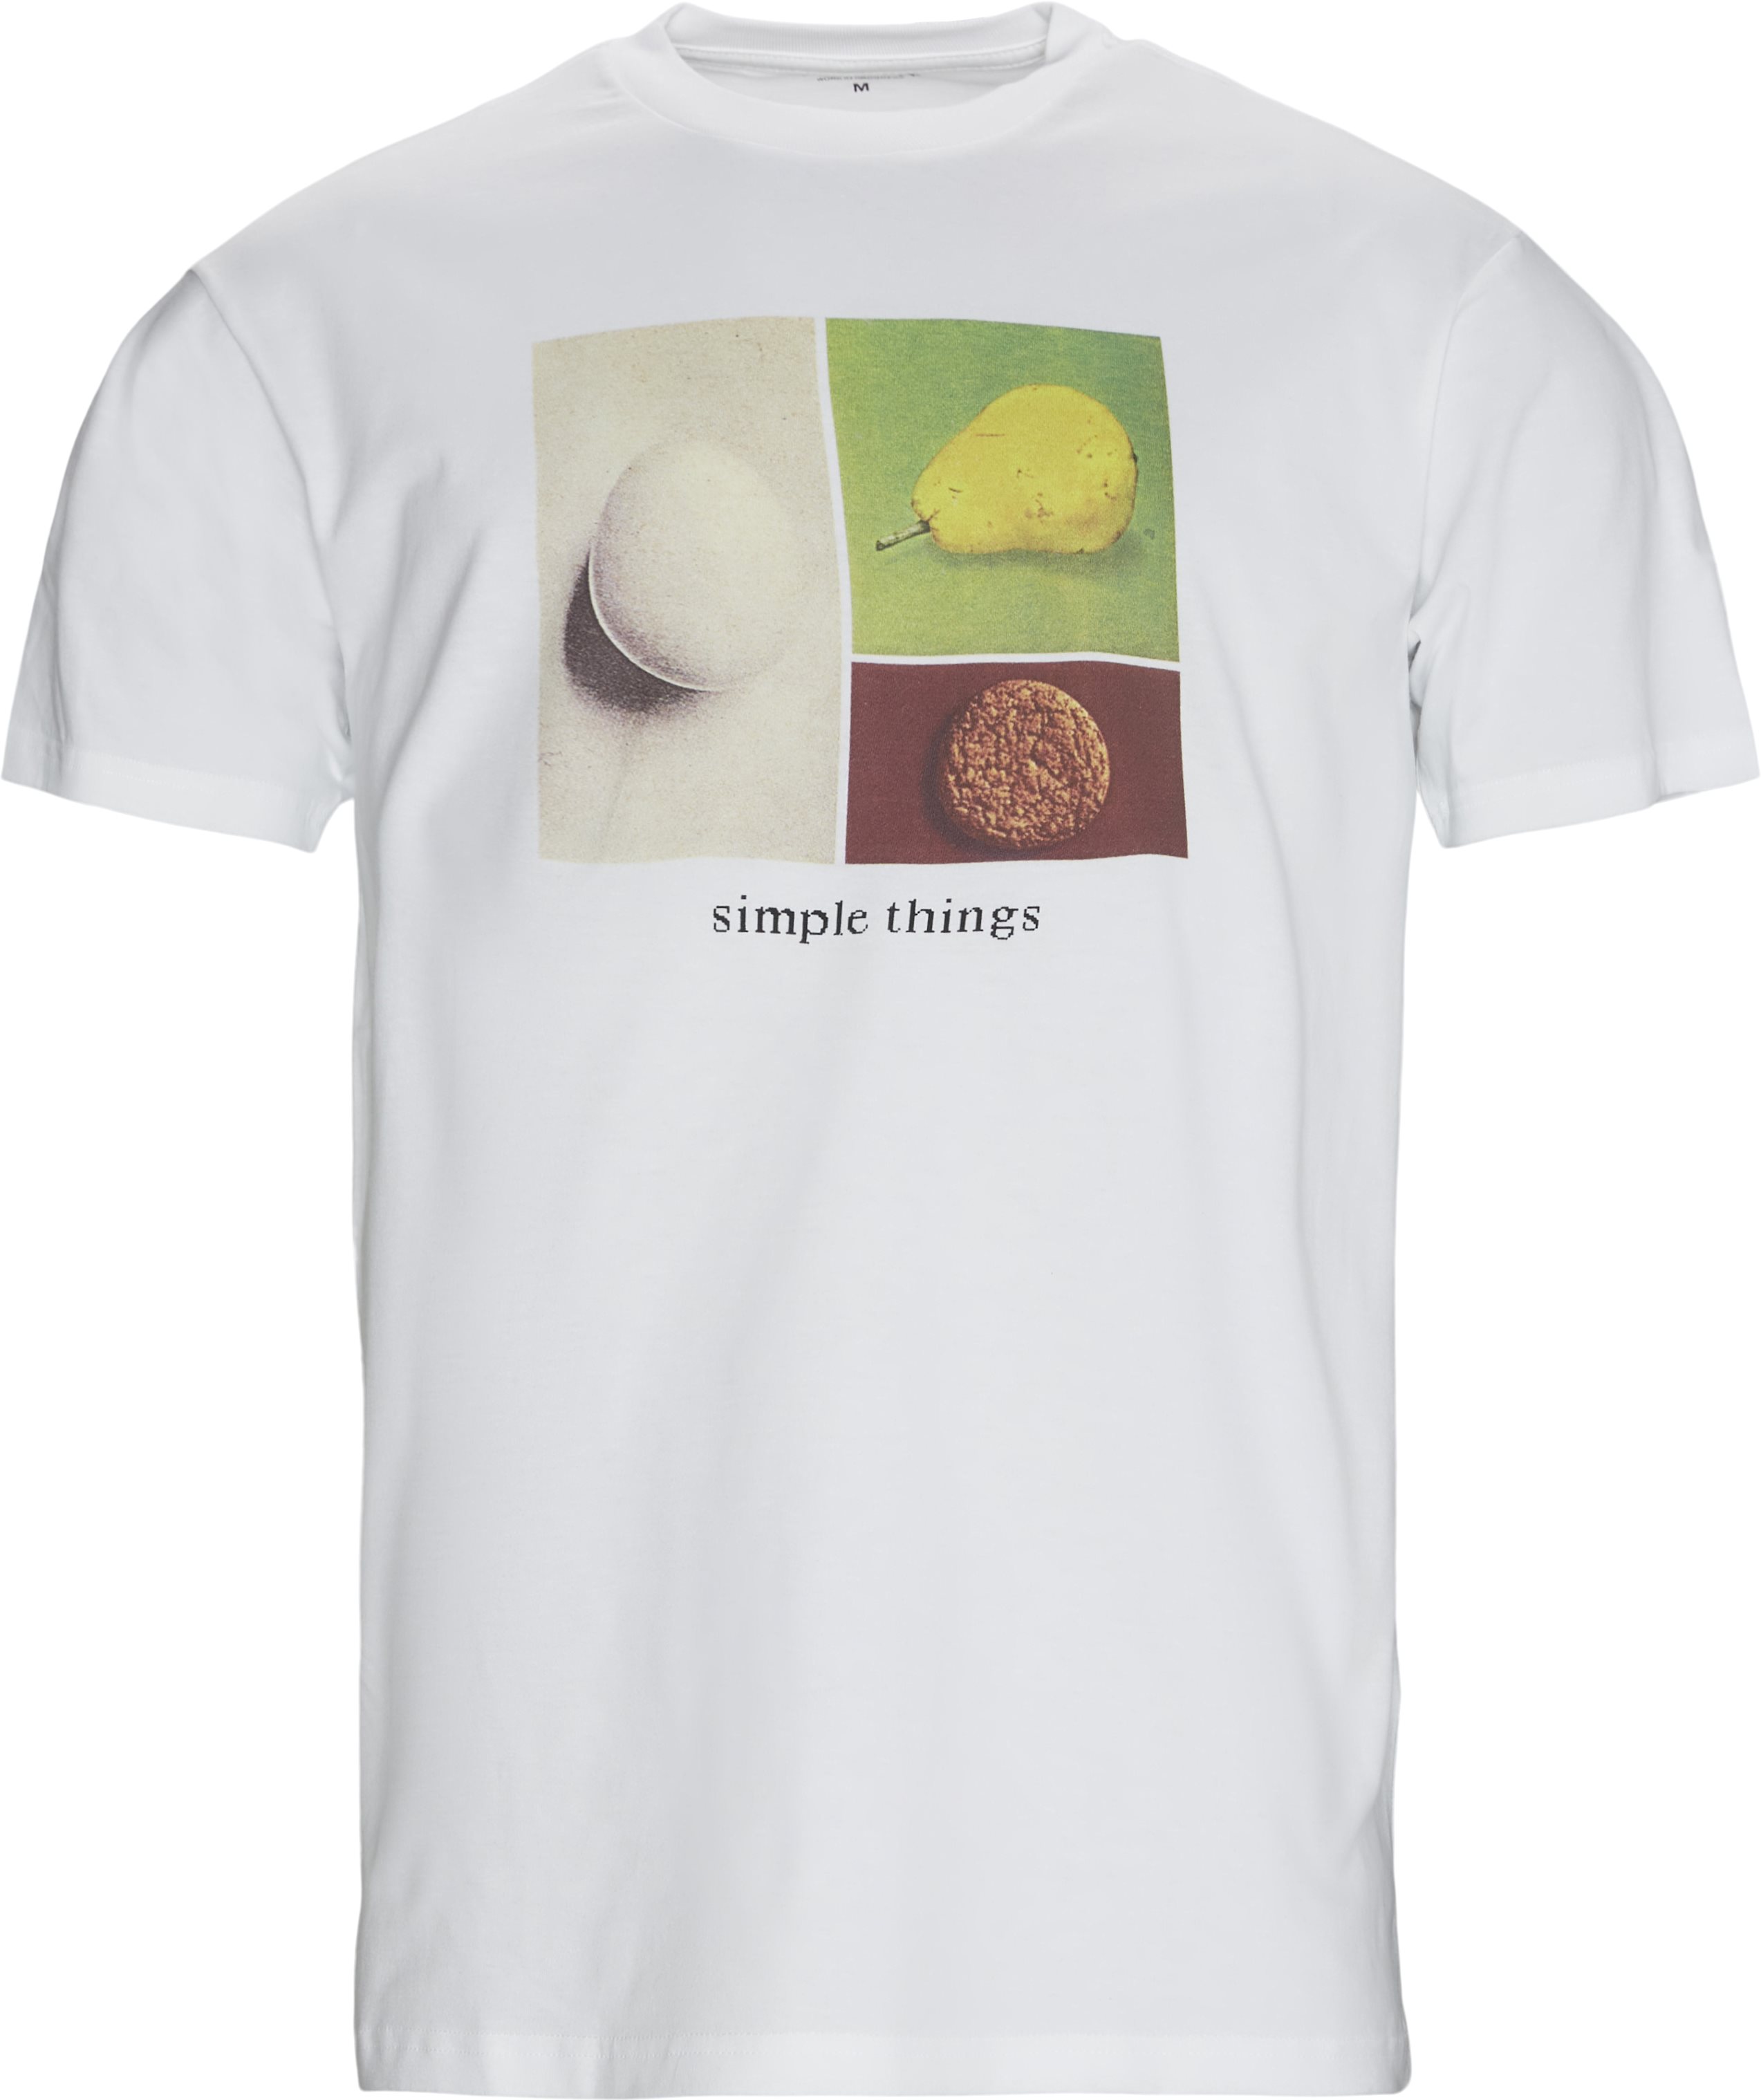 Simple Things Tee - T-shirts - Regular fit - Vit